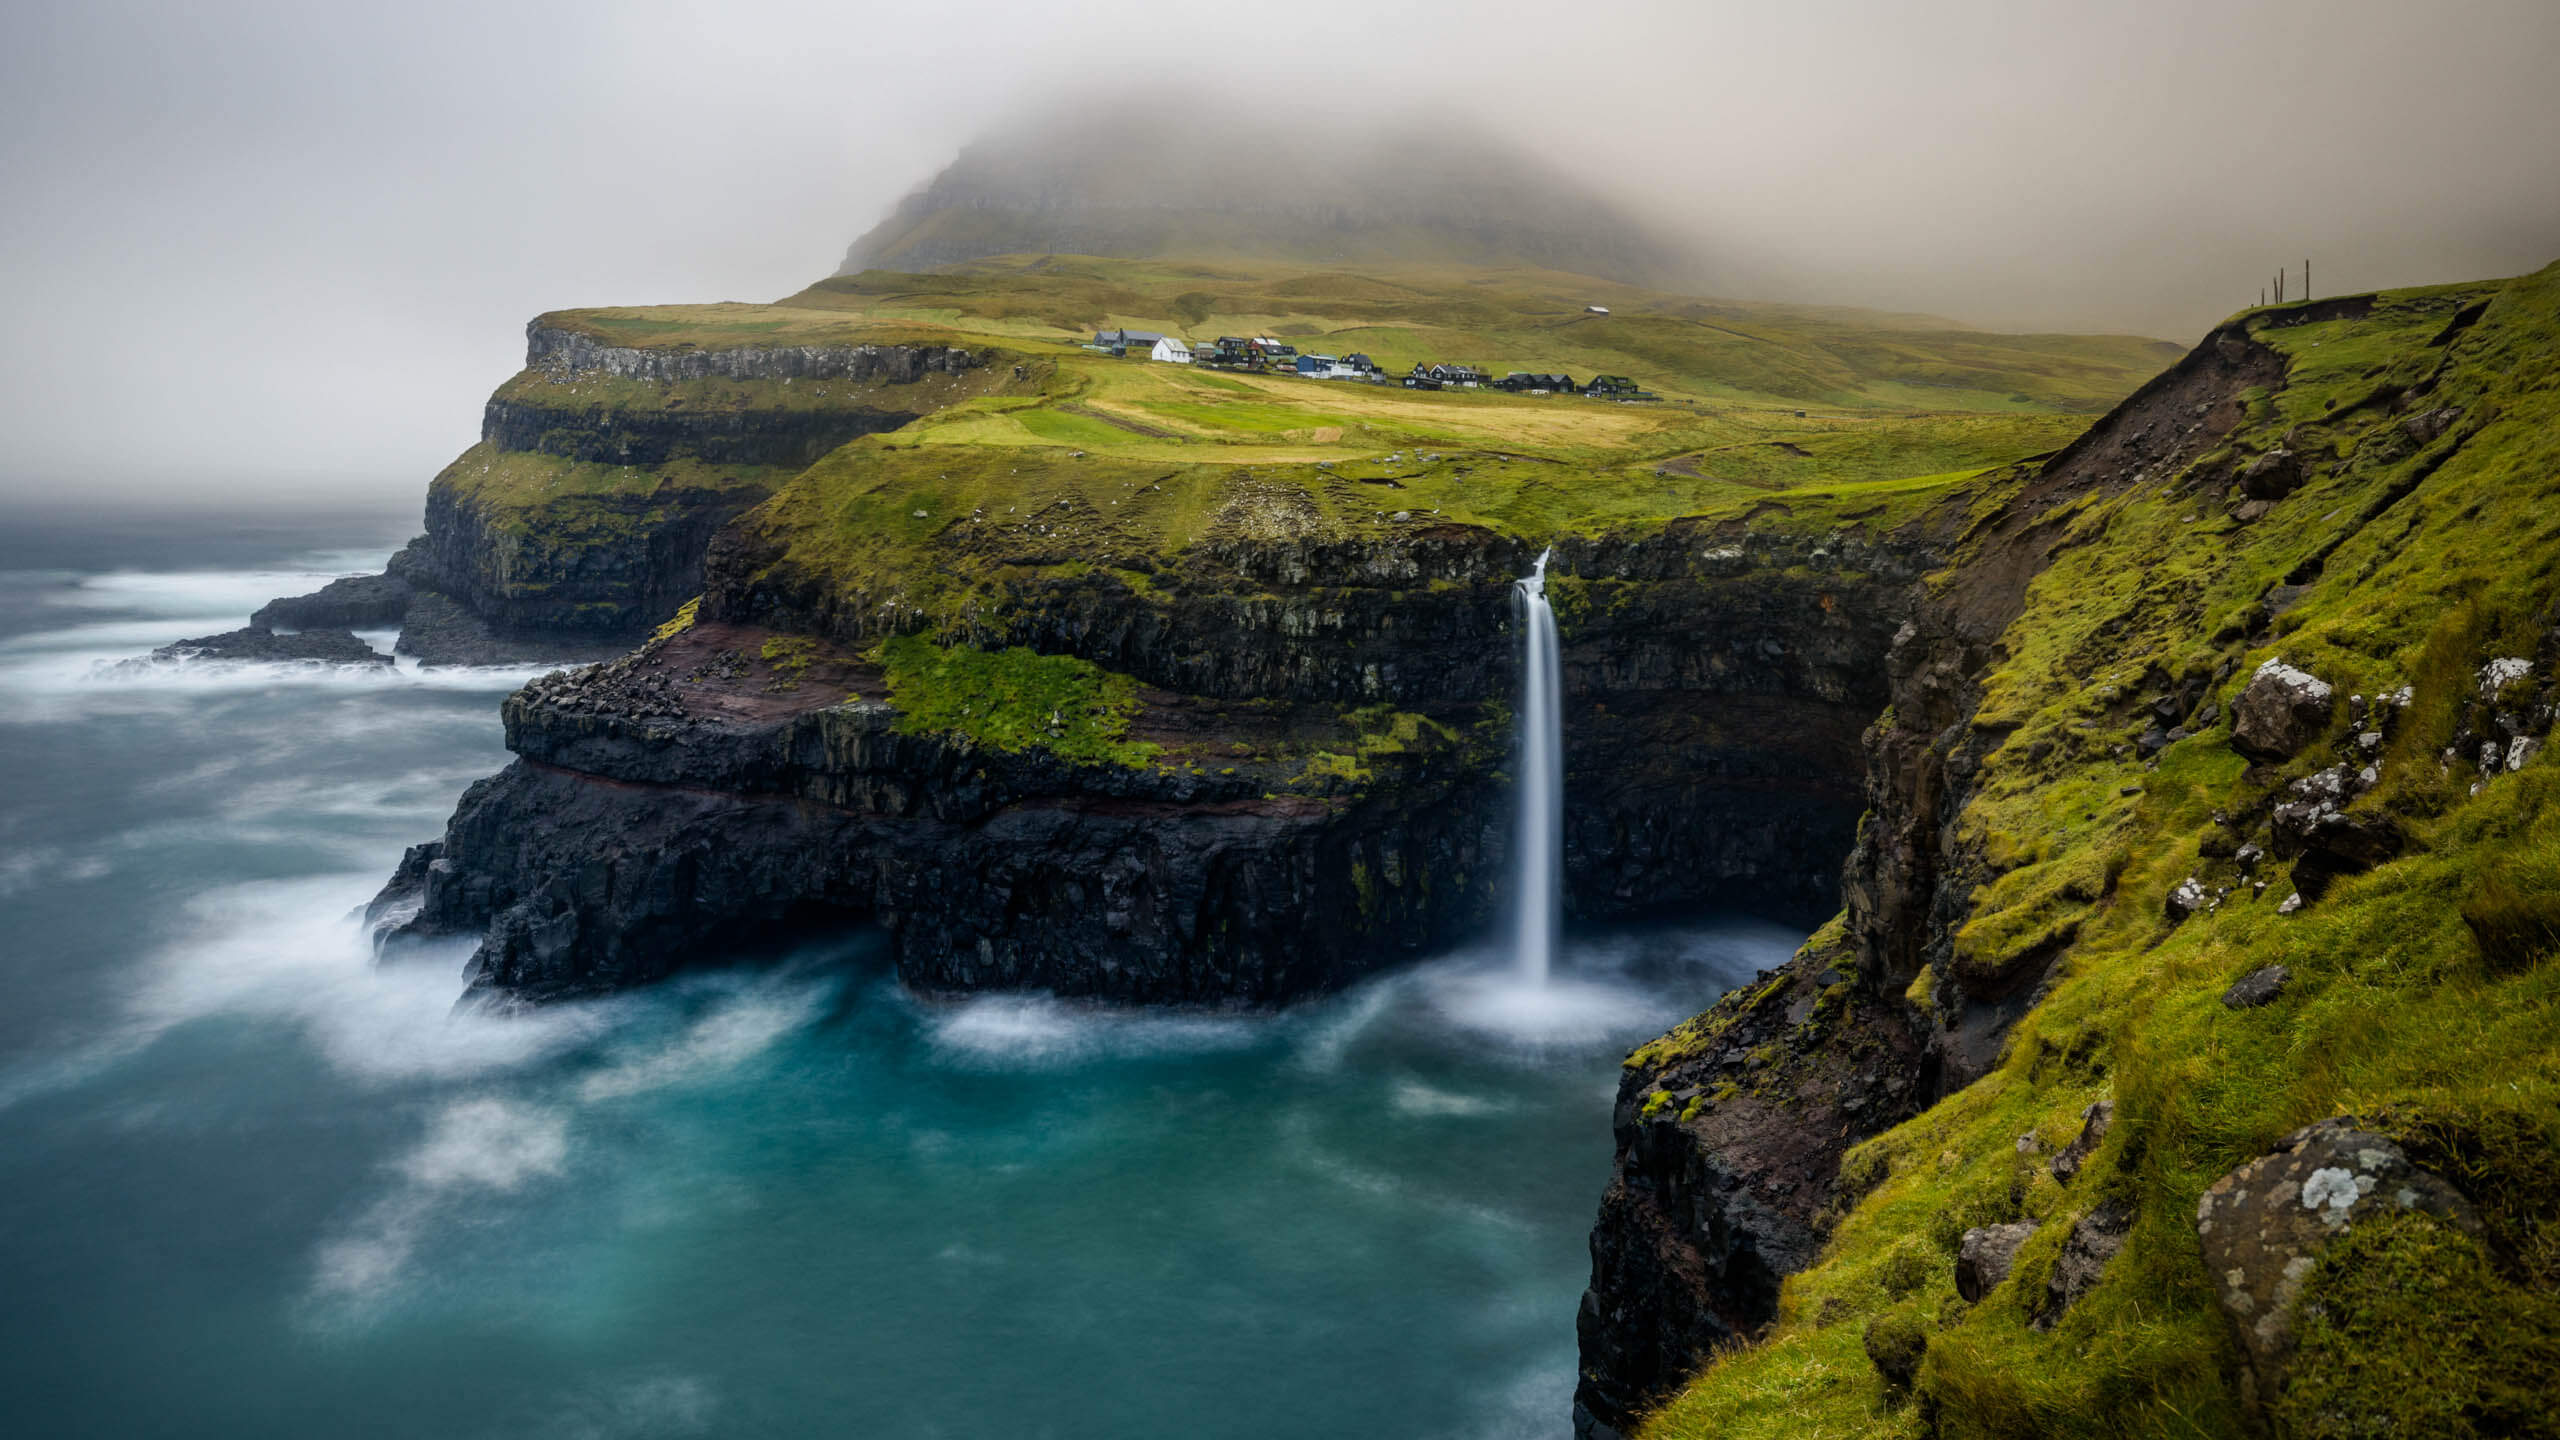 Far out Faroes: A photo essay from the Faroe Islands